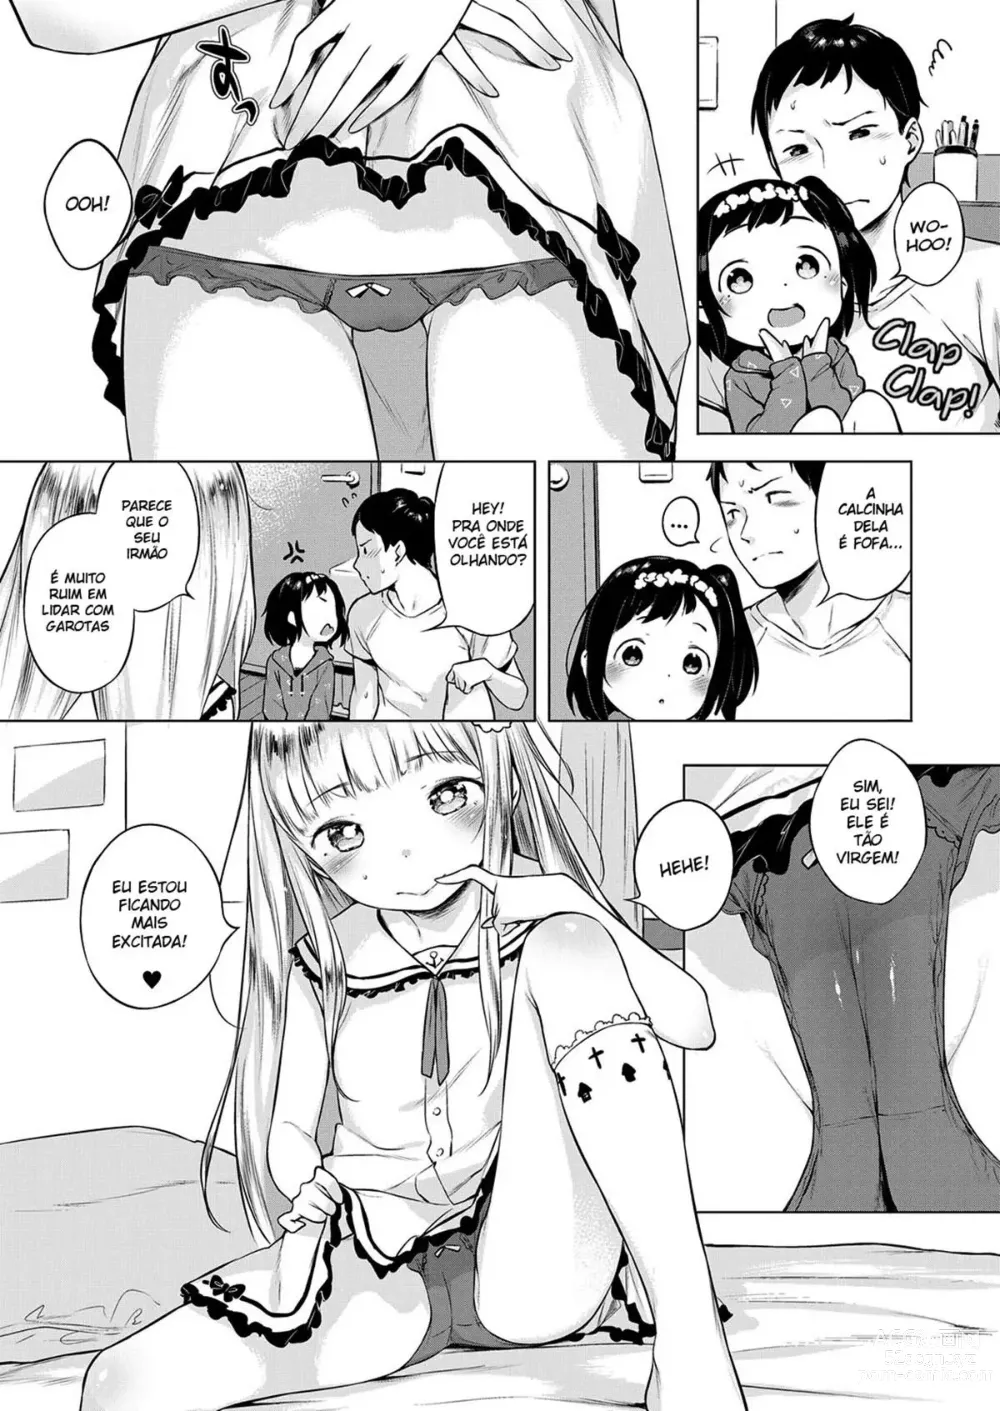 Page 7 of manga Intruding Stripping!